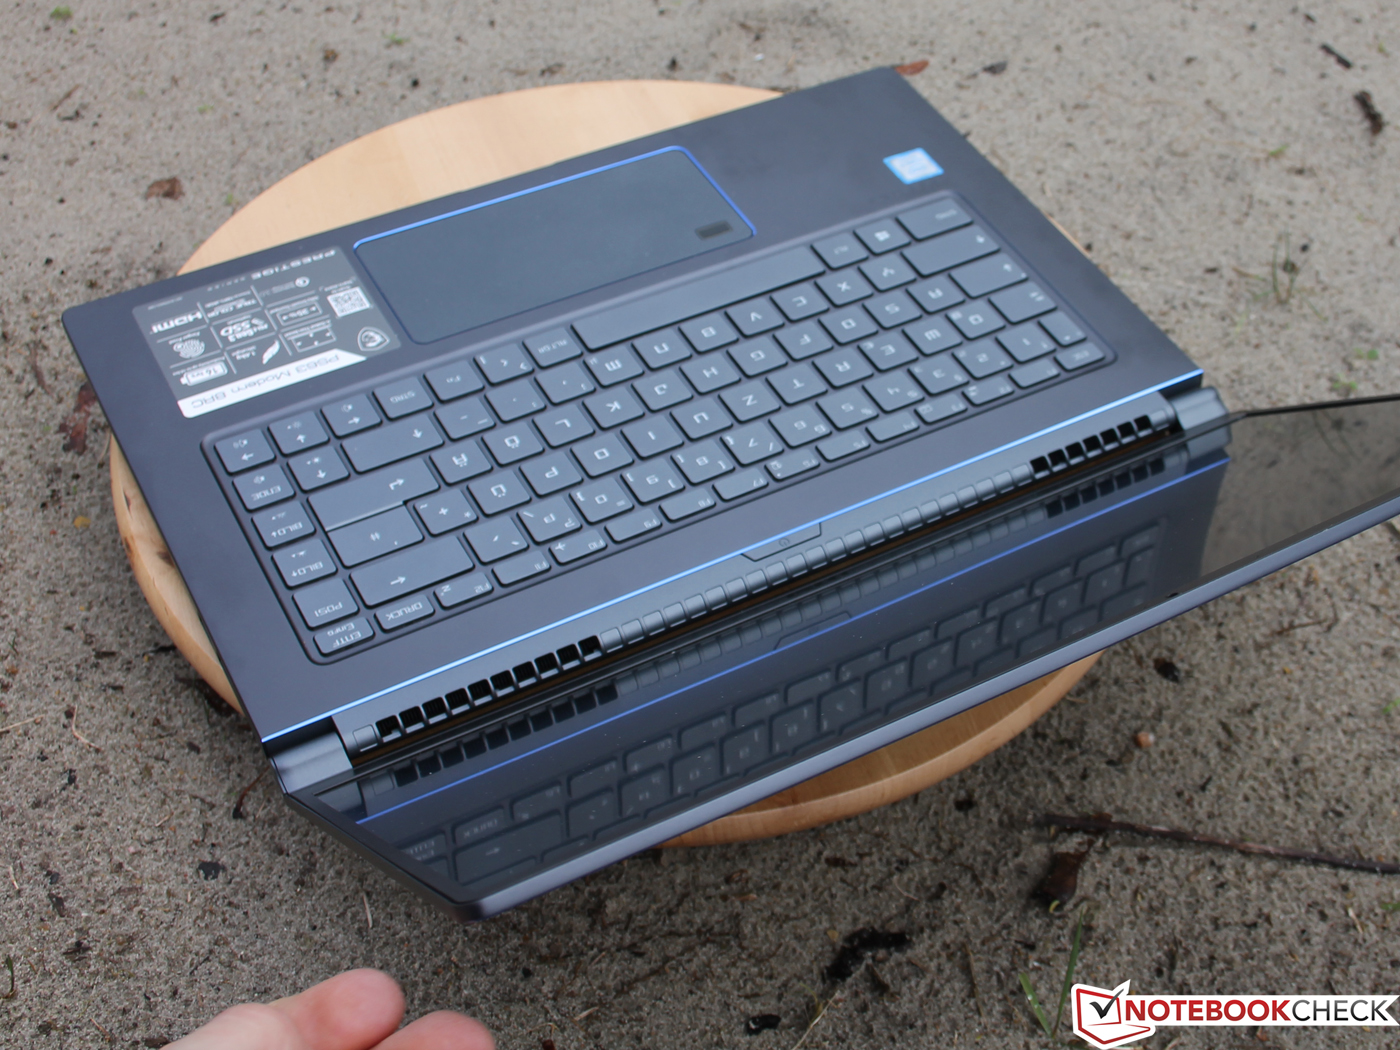 MSI PS63 Modern 8RC (Core i7-8565U, GTX 1050 Max-Q) Laptop Review - NotebookCheck.net Reviews